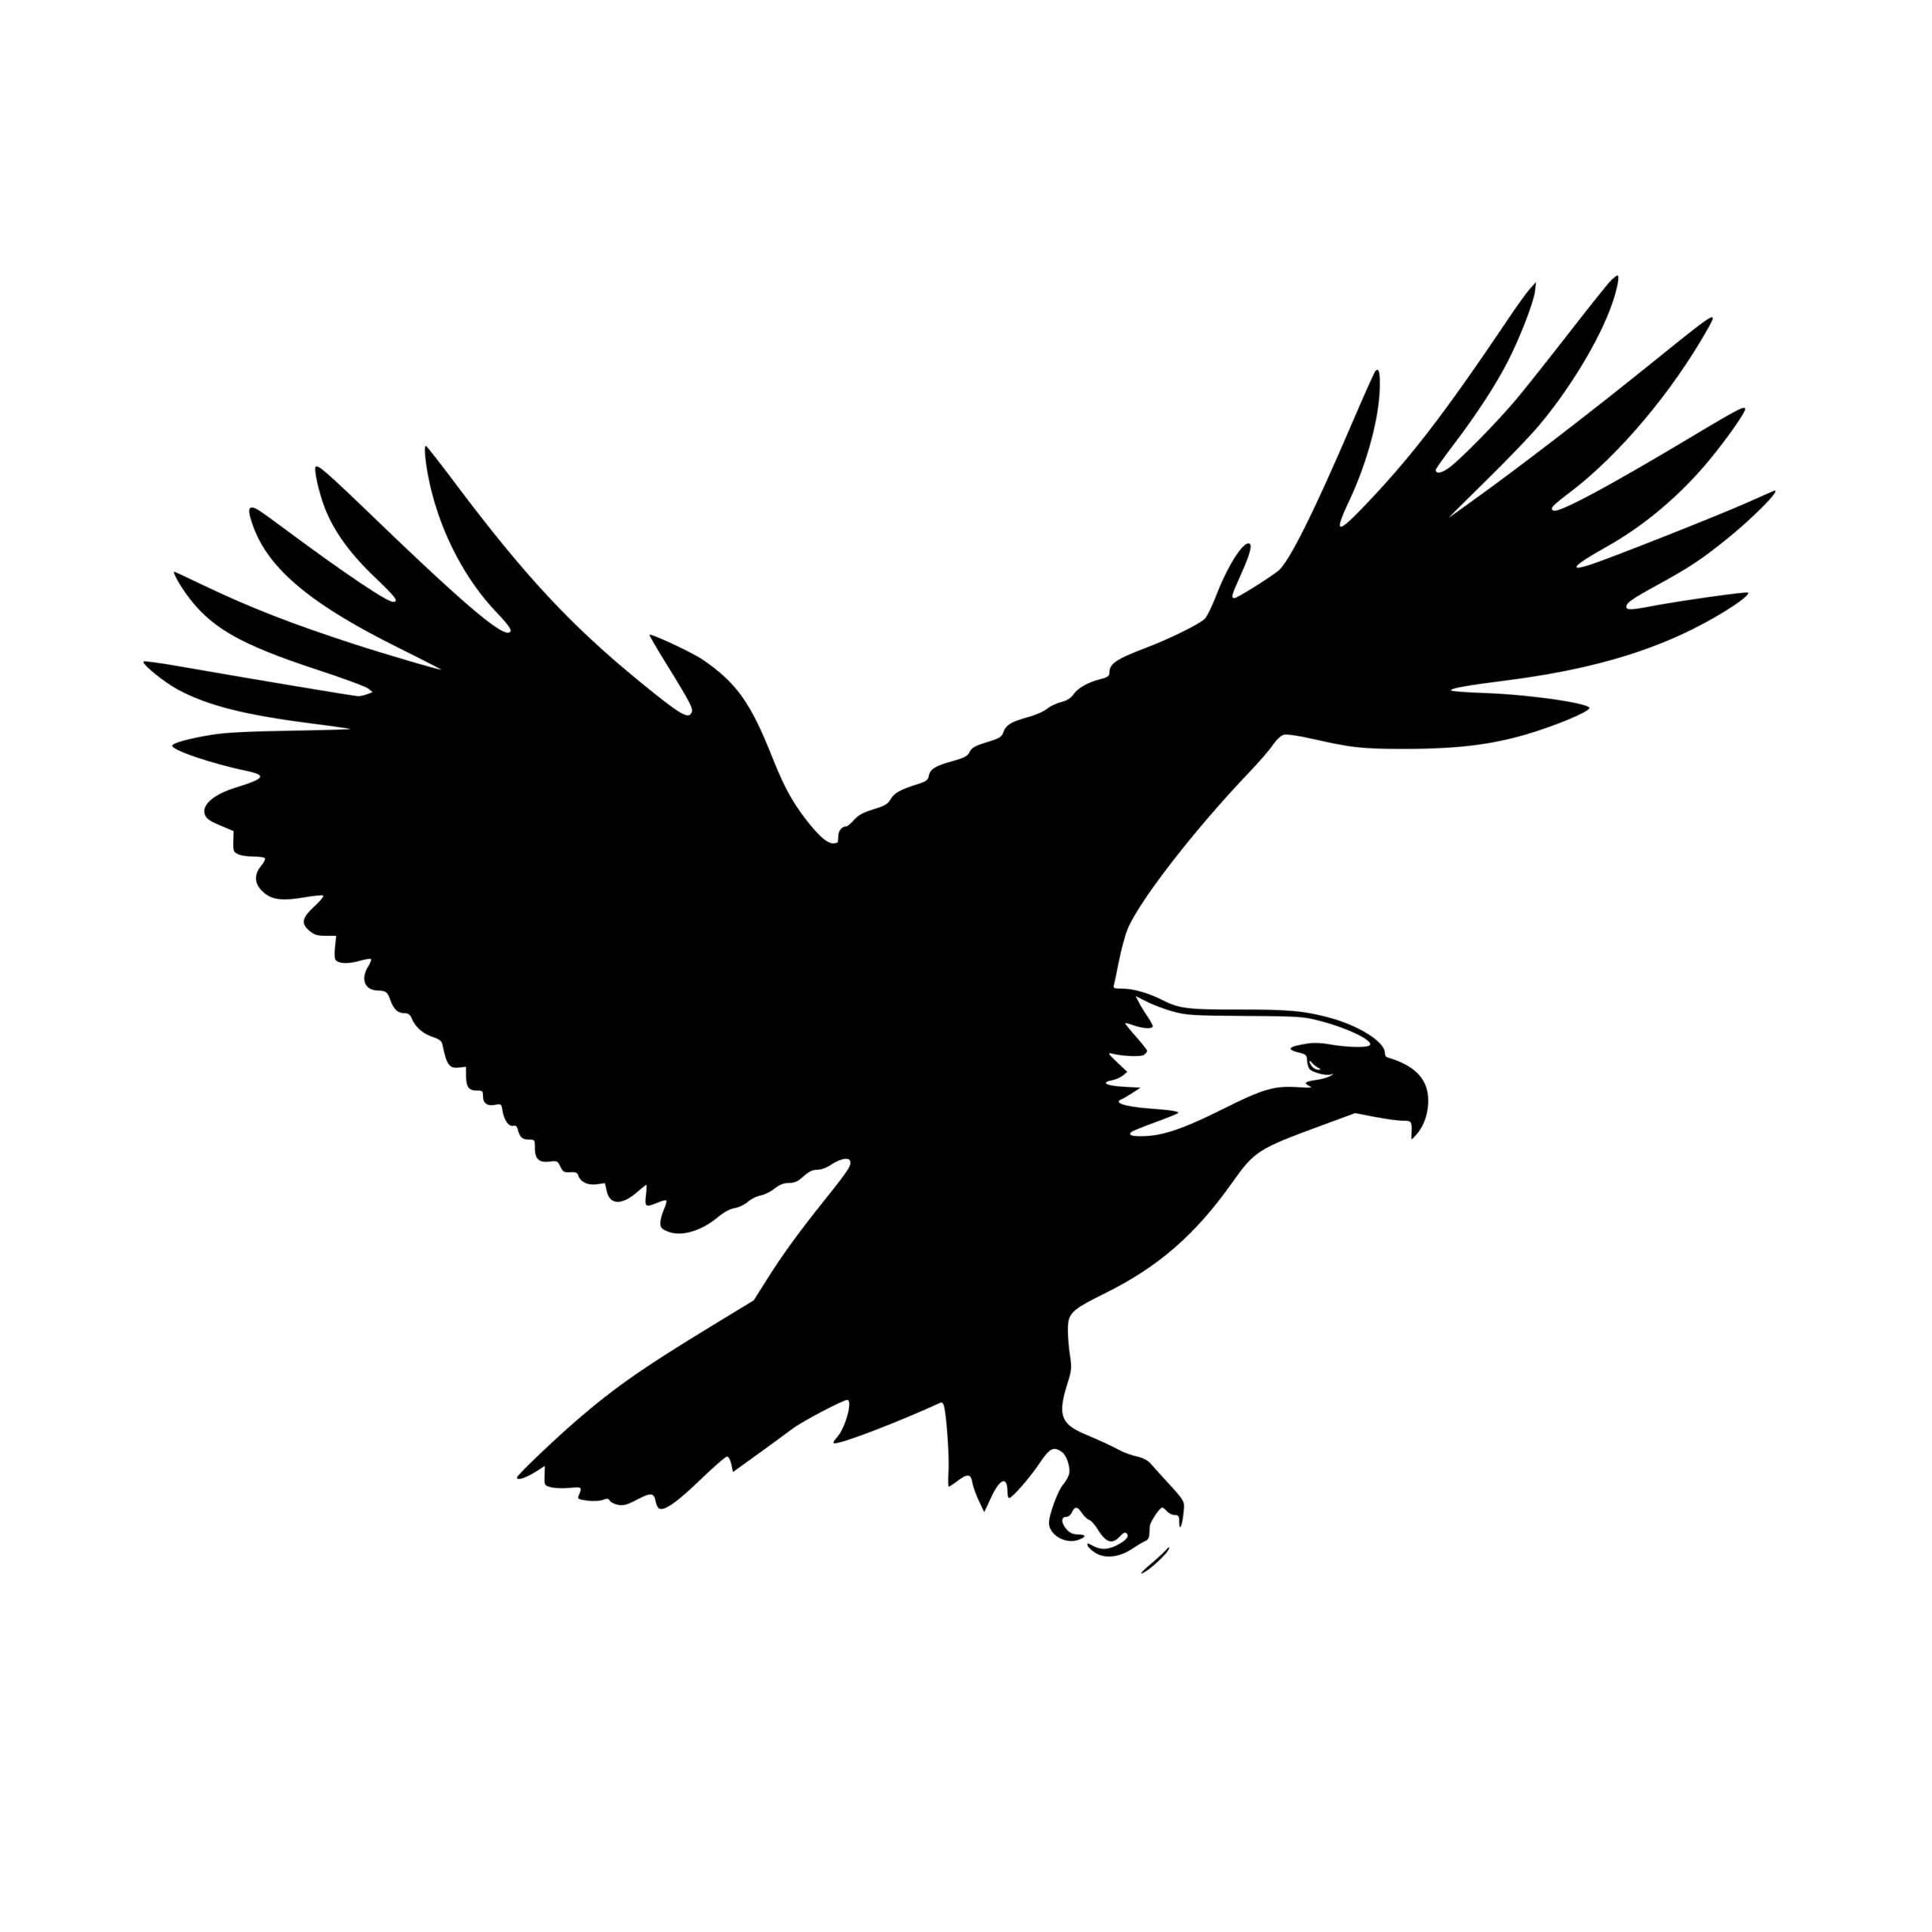 Bald Eagle in Flight SVG: Instant Download for Cricut, Silhouette, Laser